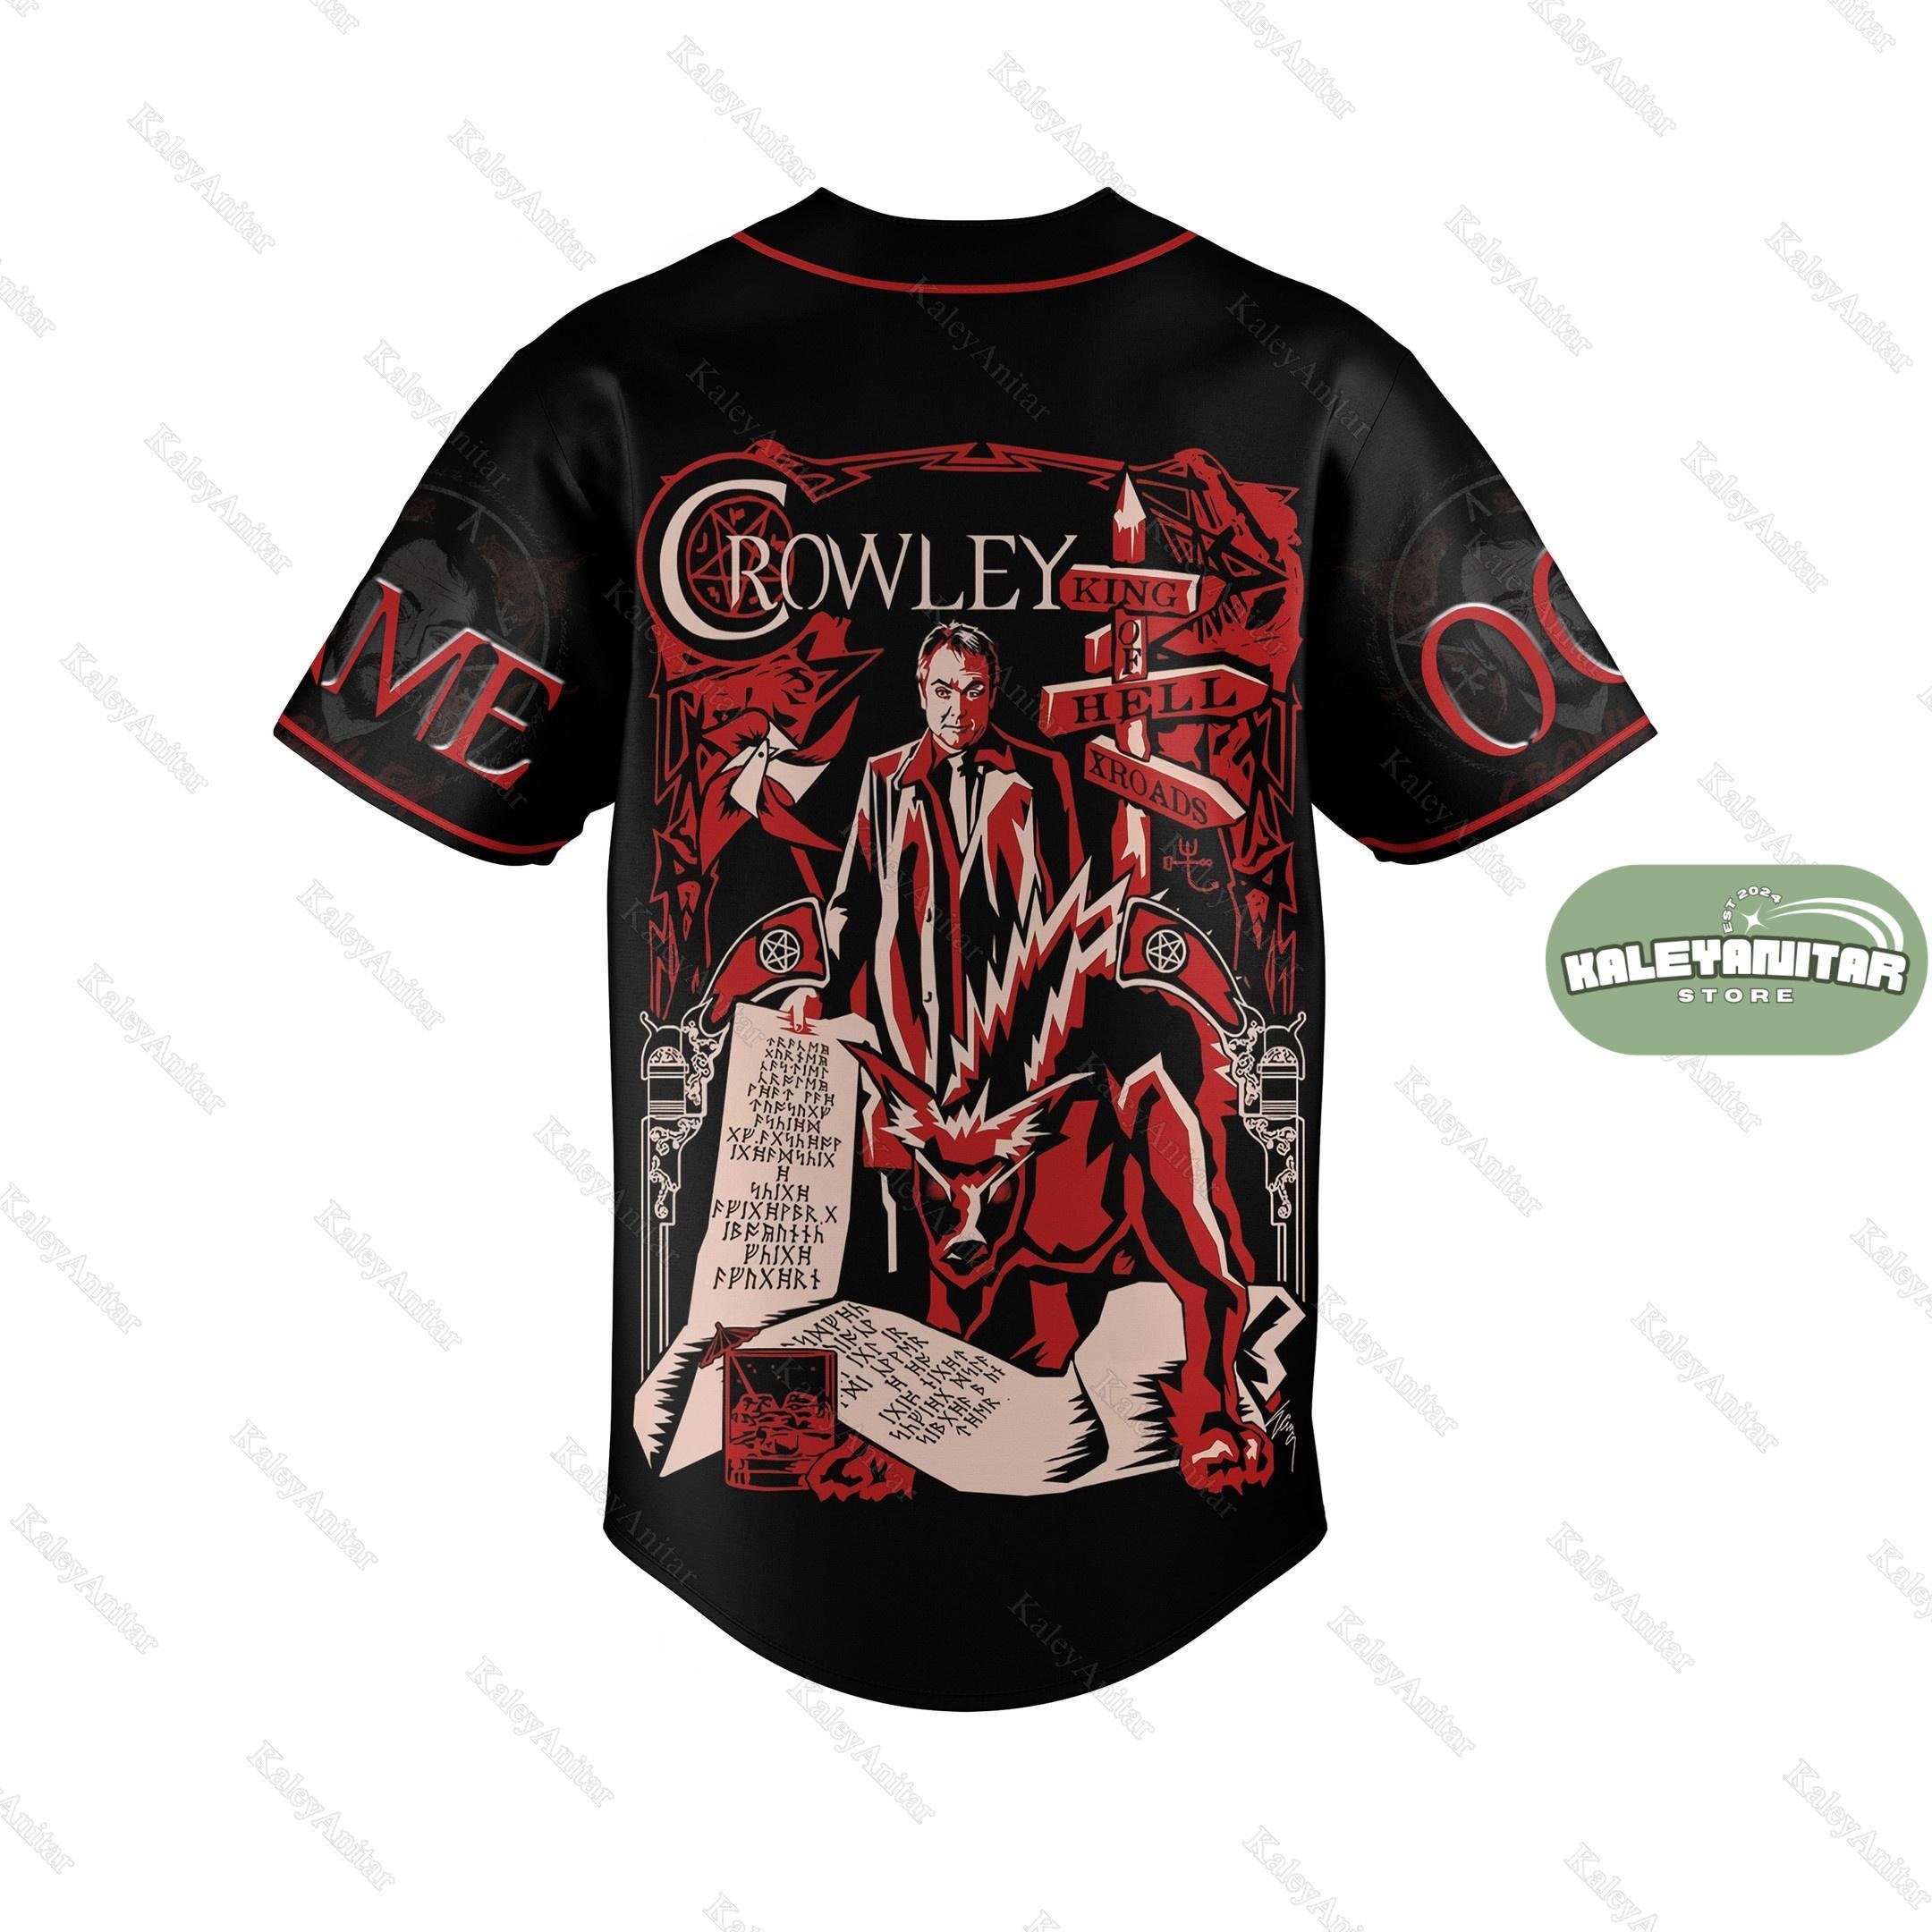 Custom Supernatural Jersey Shirt, Crowley Demon Baseball Shirt